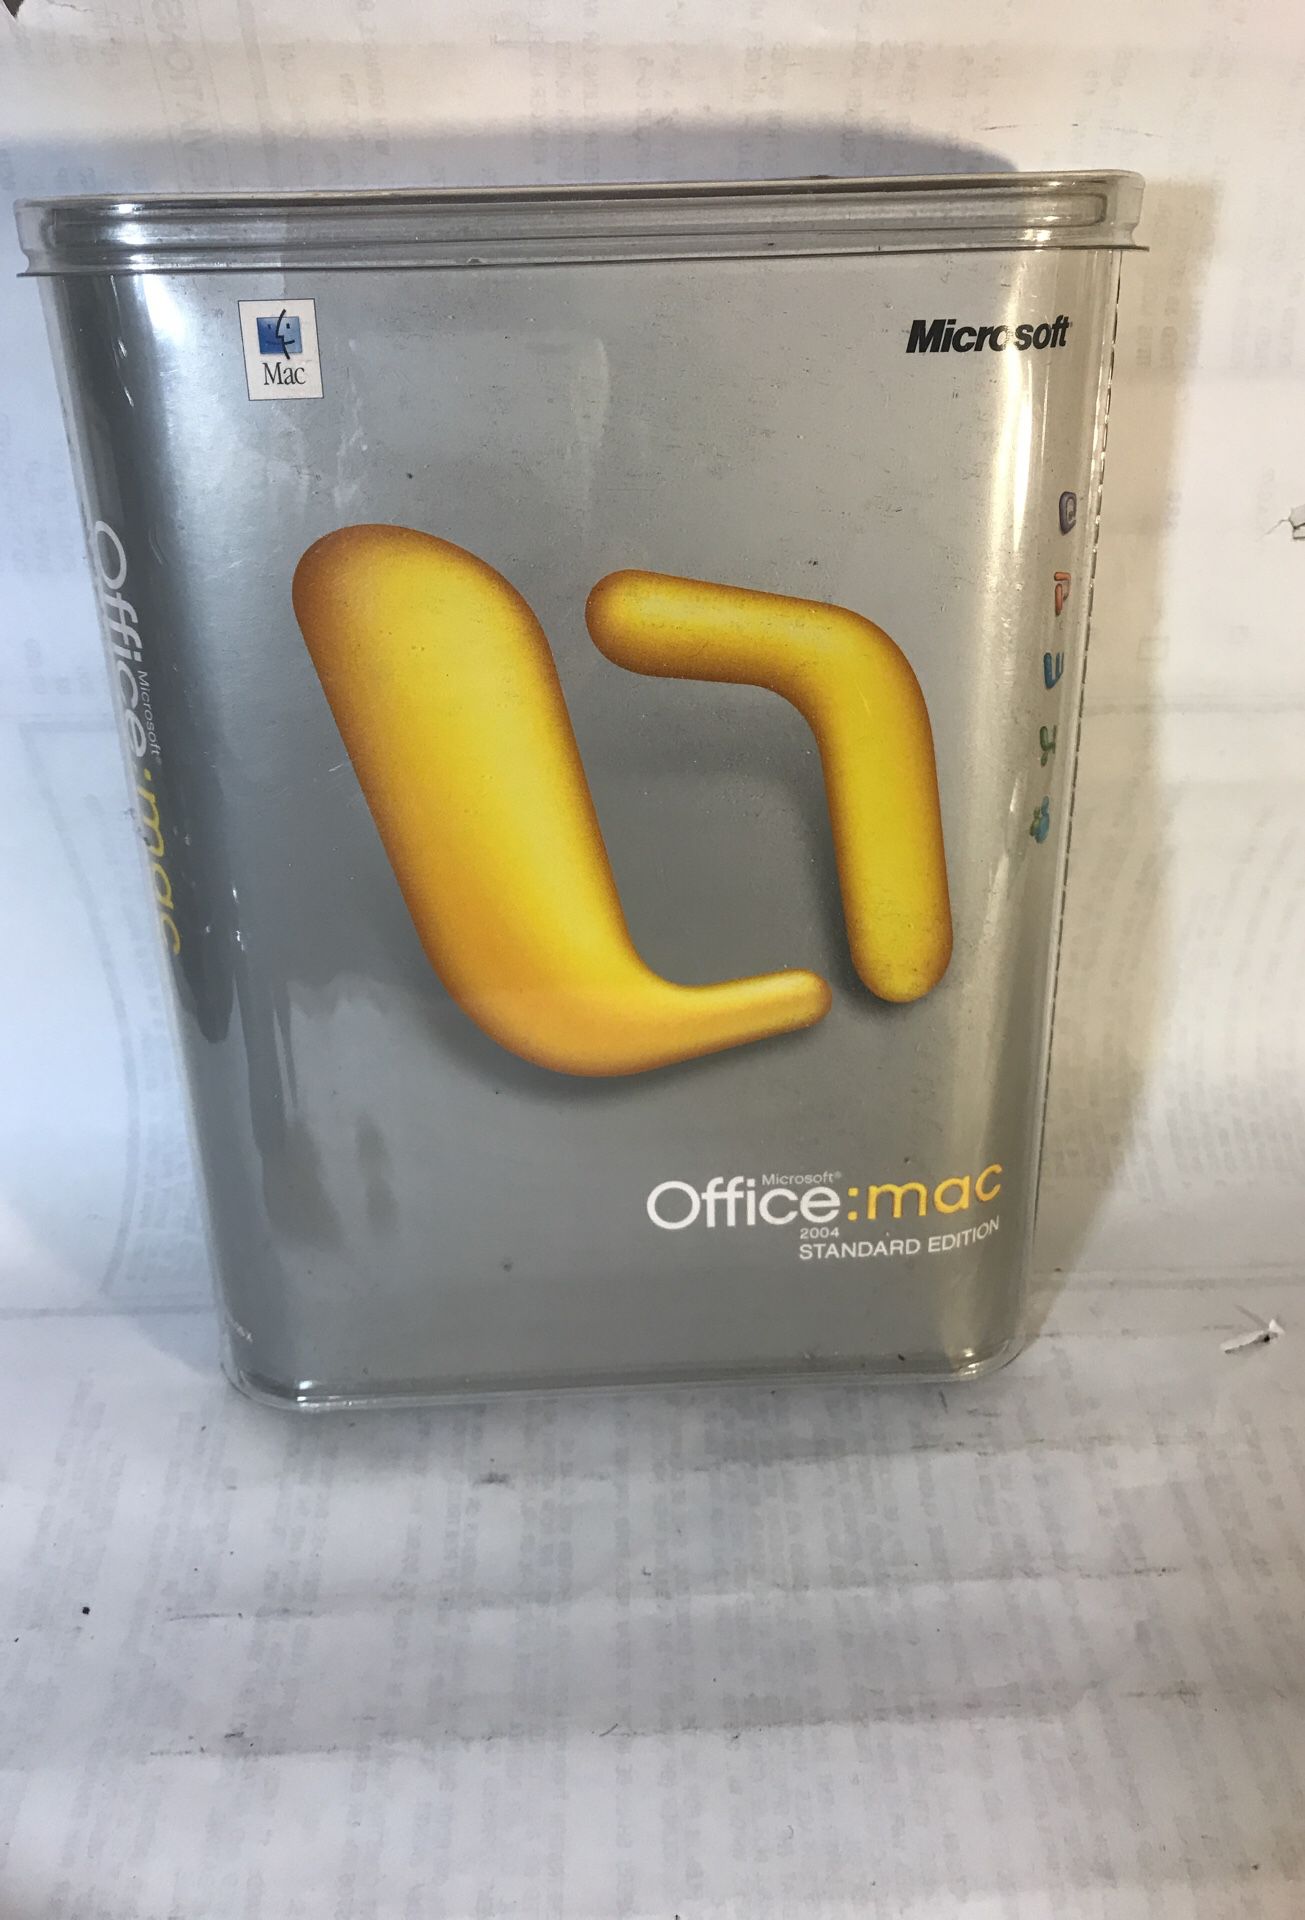 Microsoft Office Mac 2004 Standard Edition